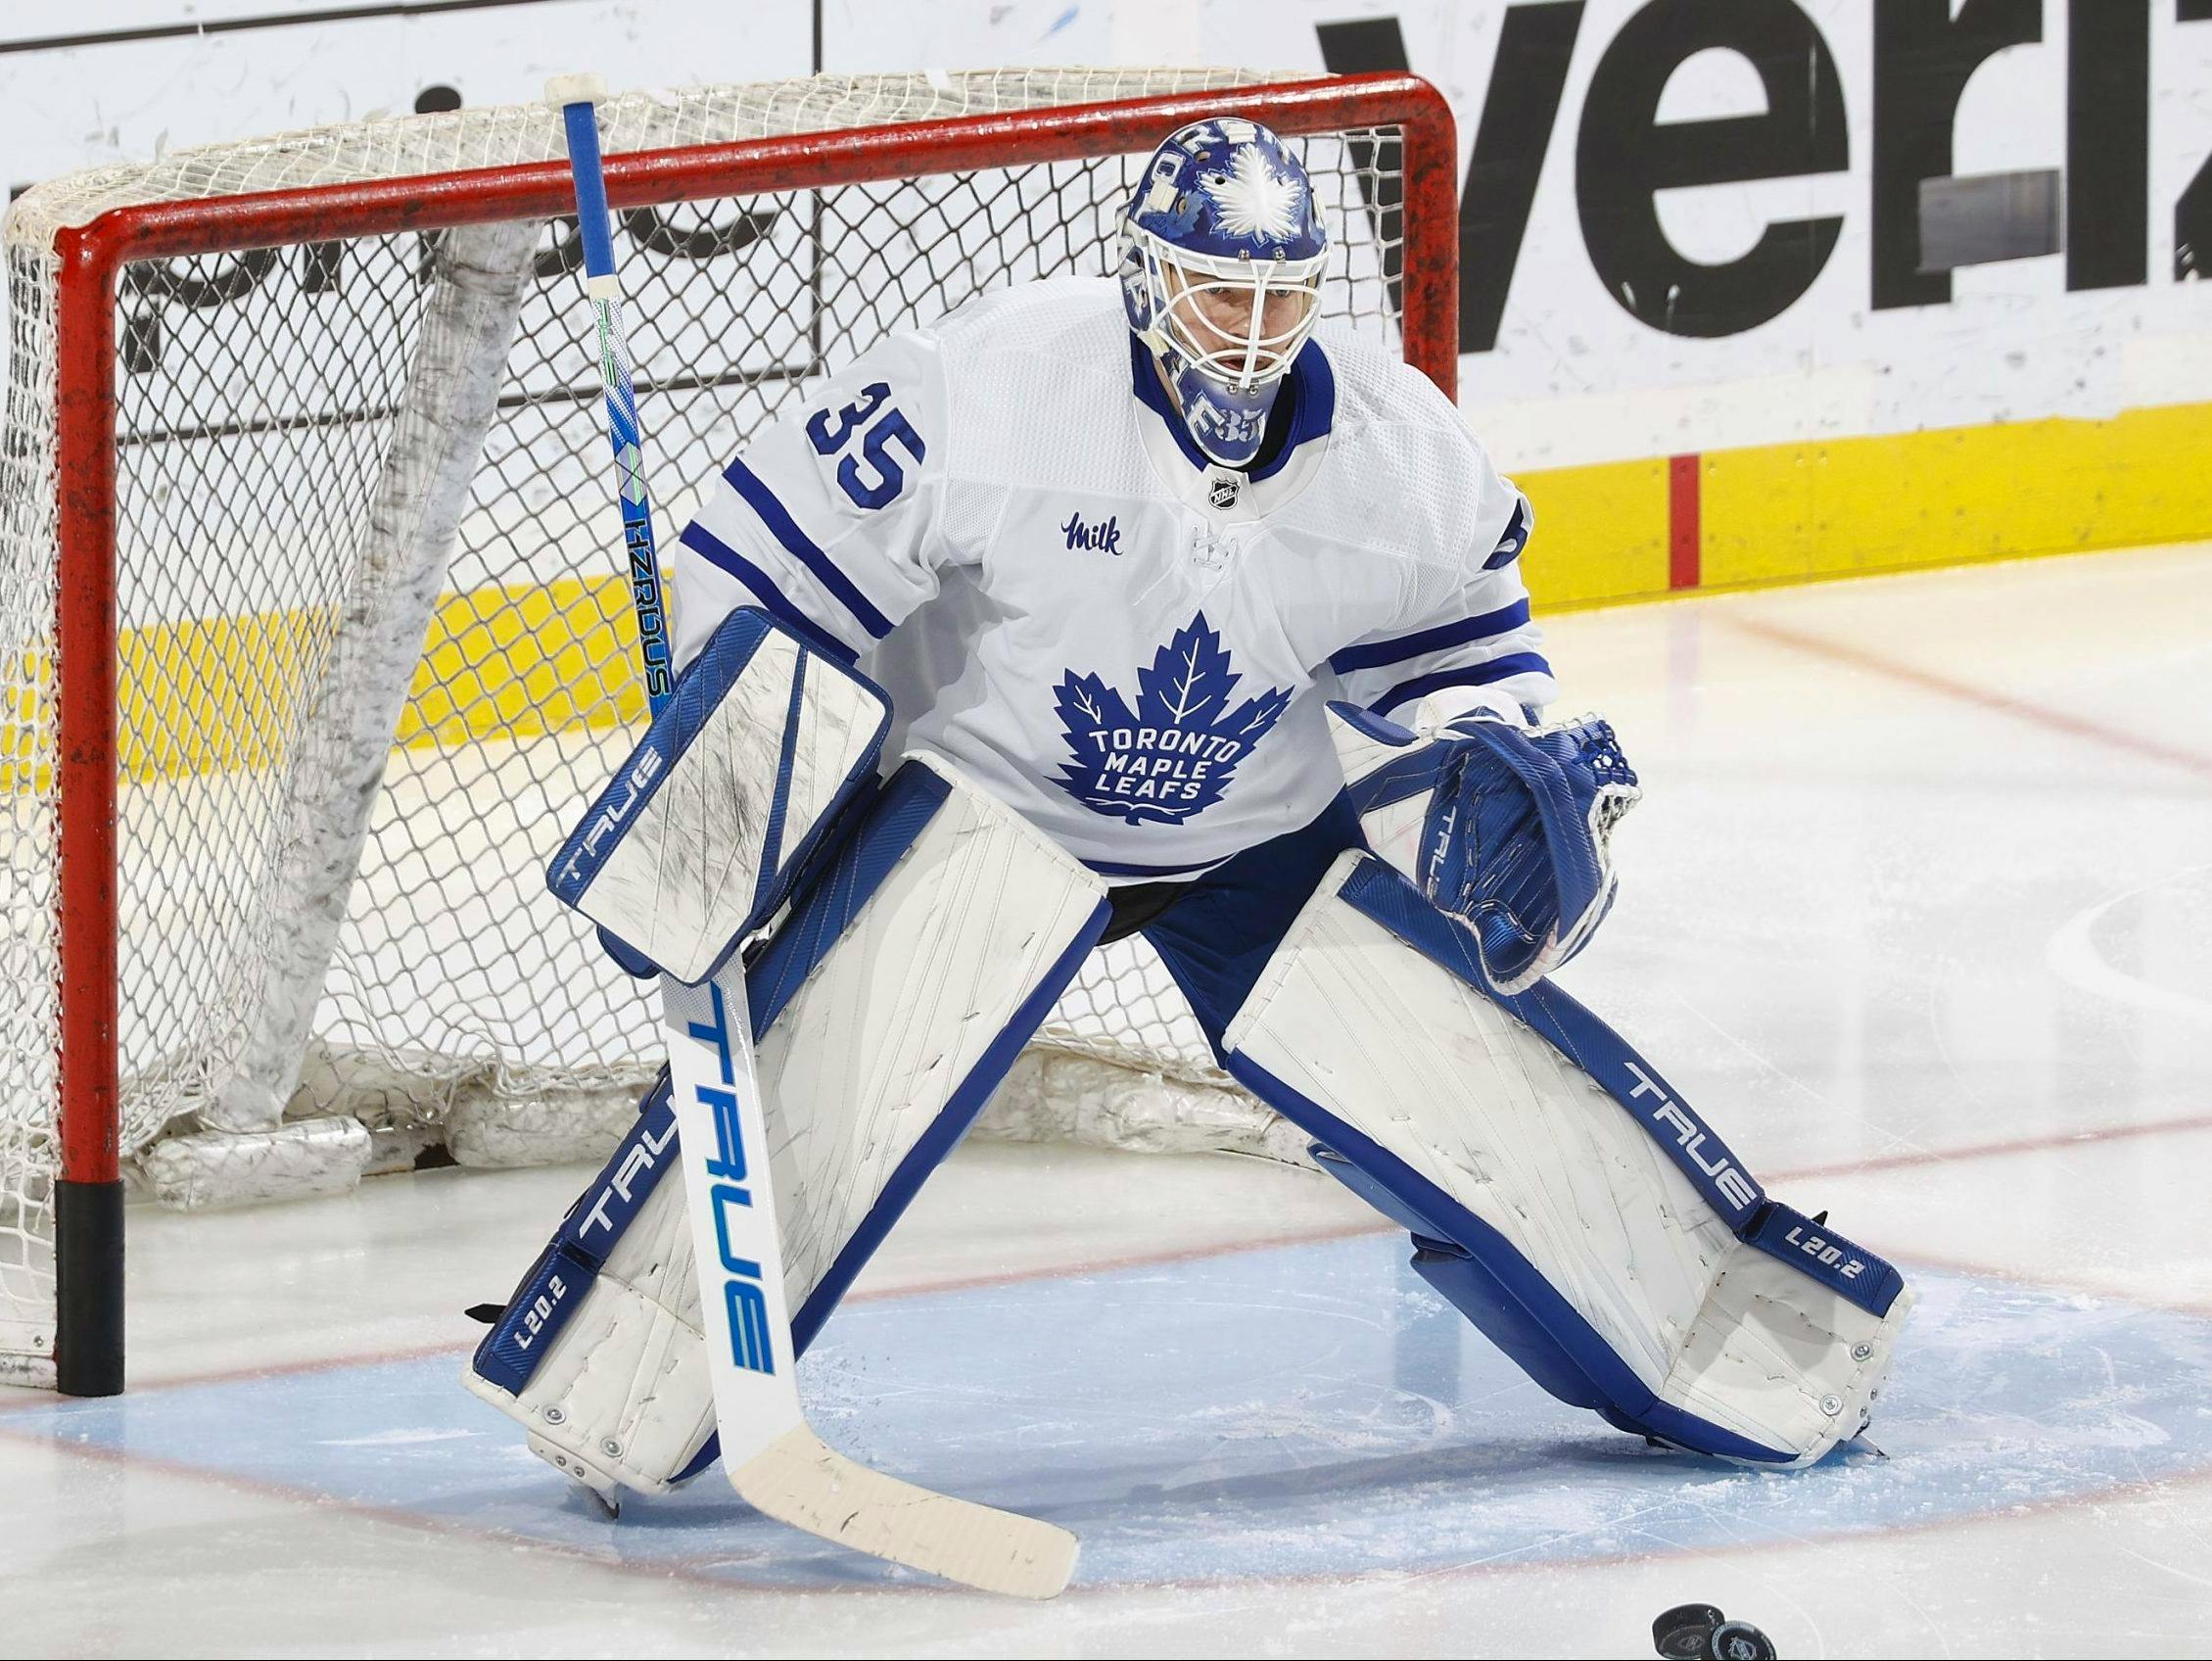 Maple Leafs' Ilya Samsonov awarded contract in arbitration